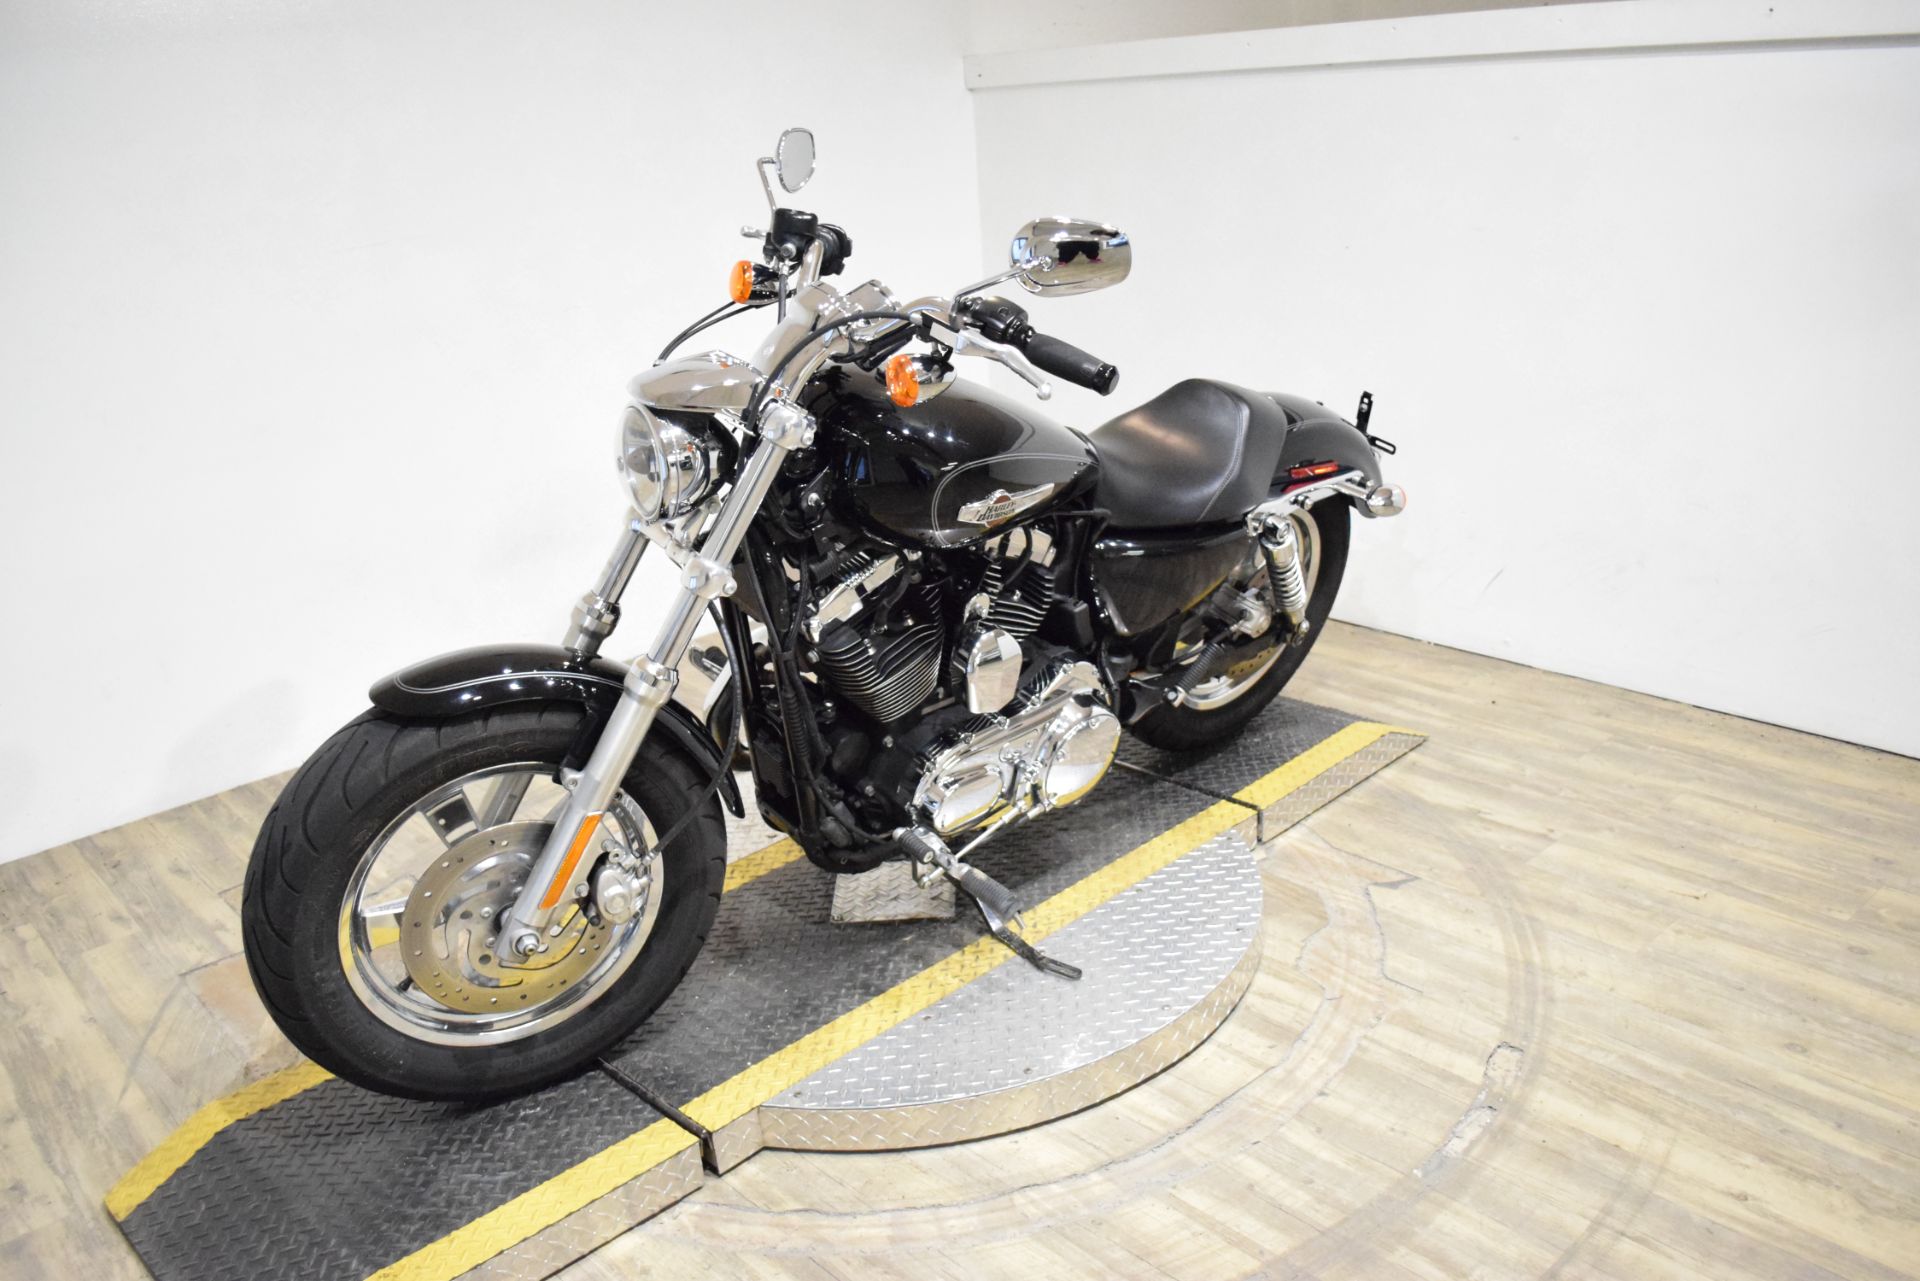 2013 Harley-Davidson Sportster® 1200 Custom in Wauconda, Illinois - Photo 22